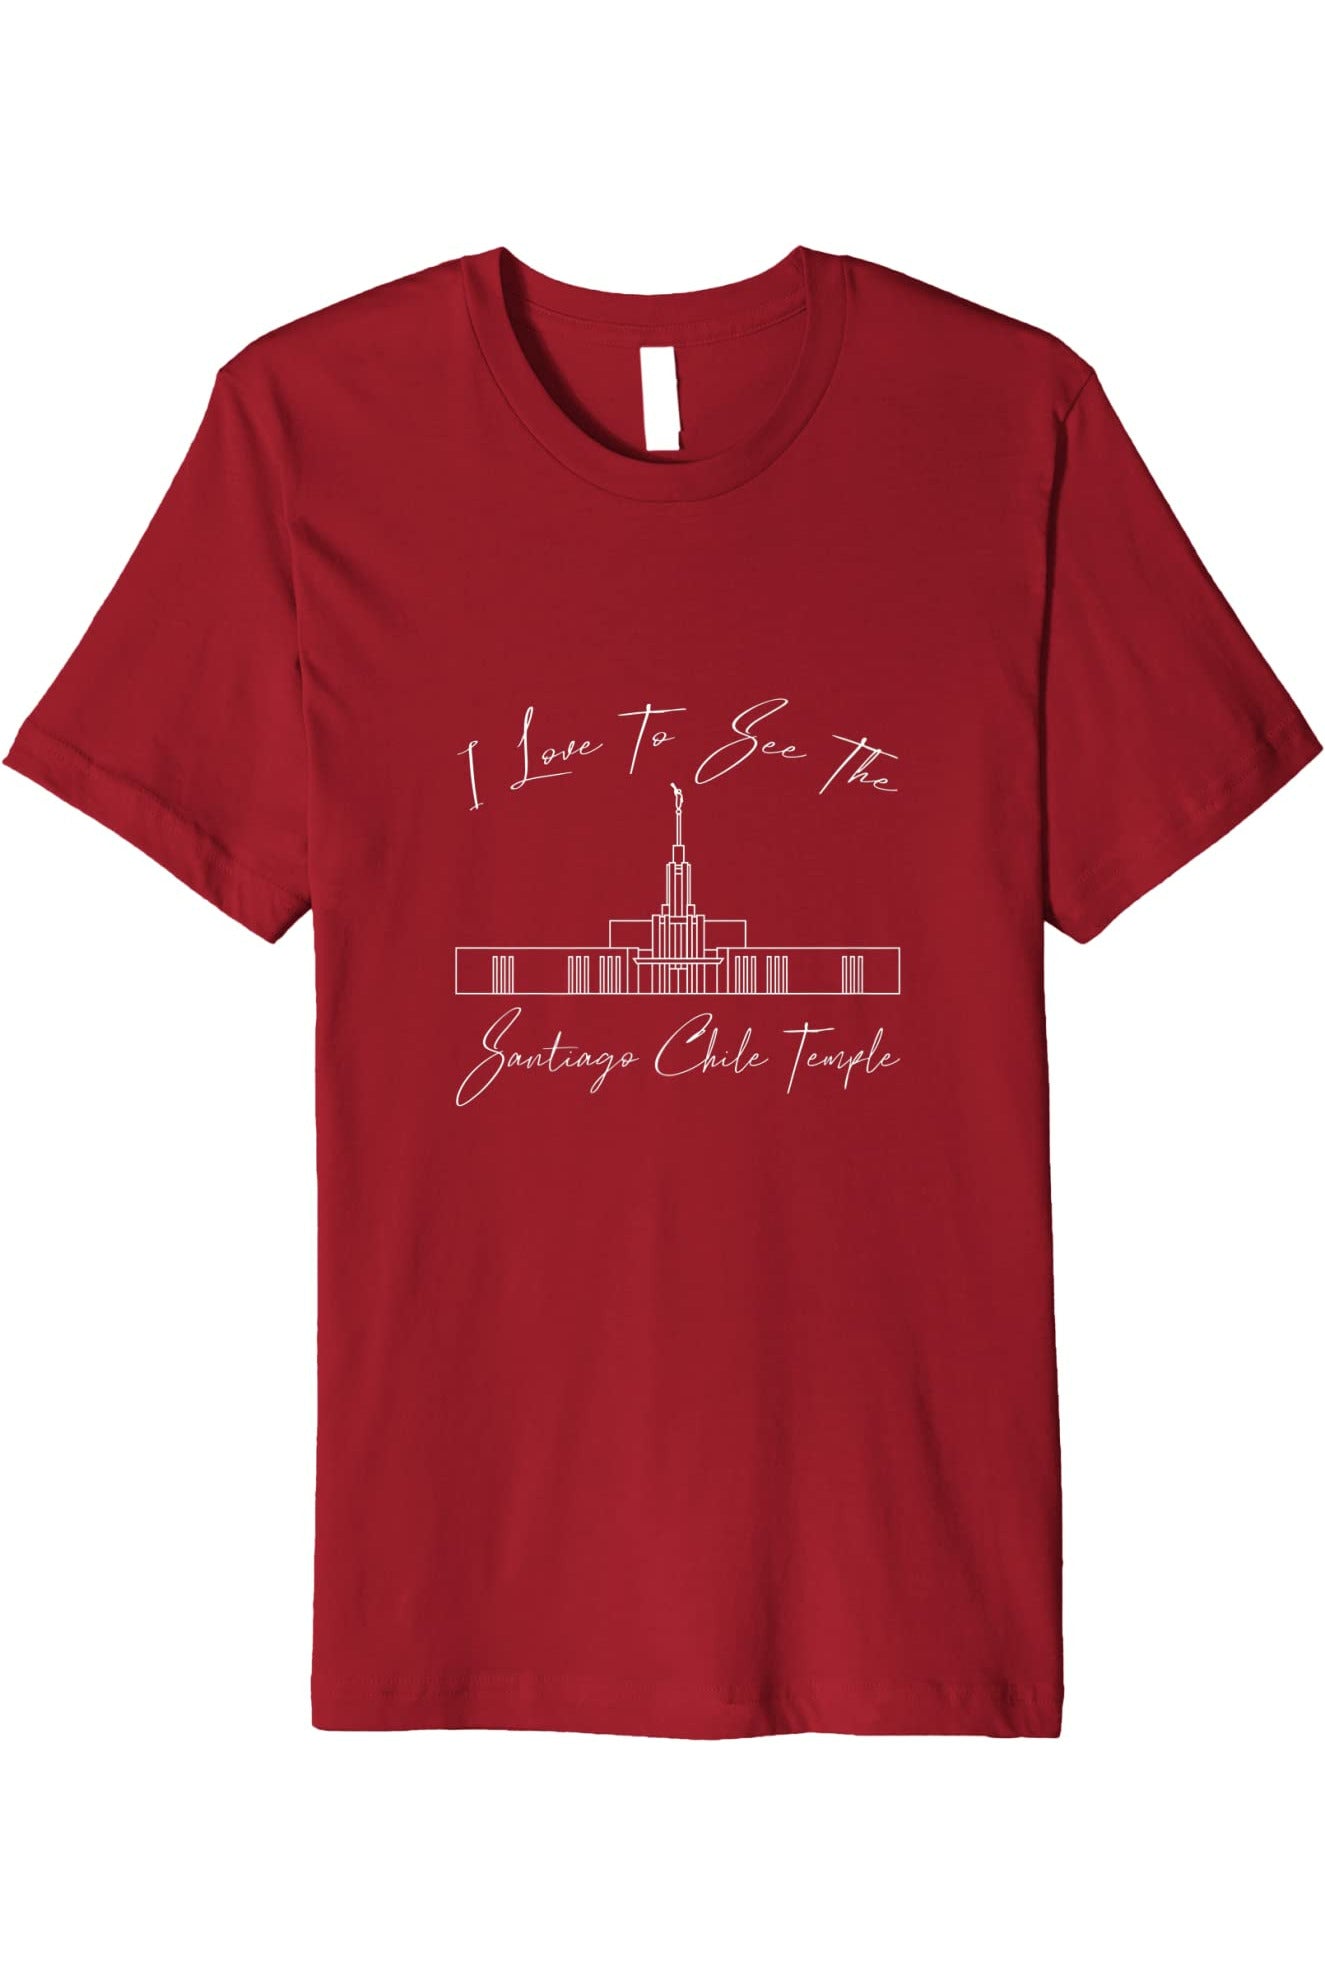 Santiago Chile Temple T-Shirt - Premium - Calligraphy Style (English) US